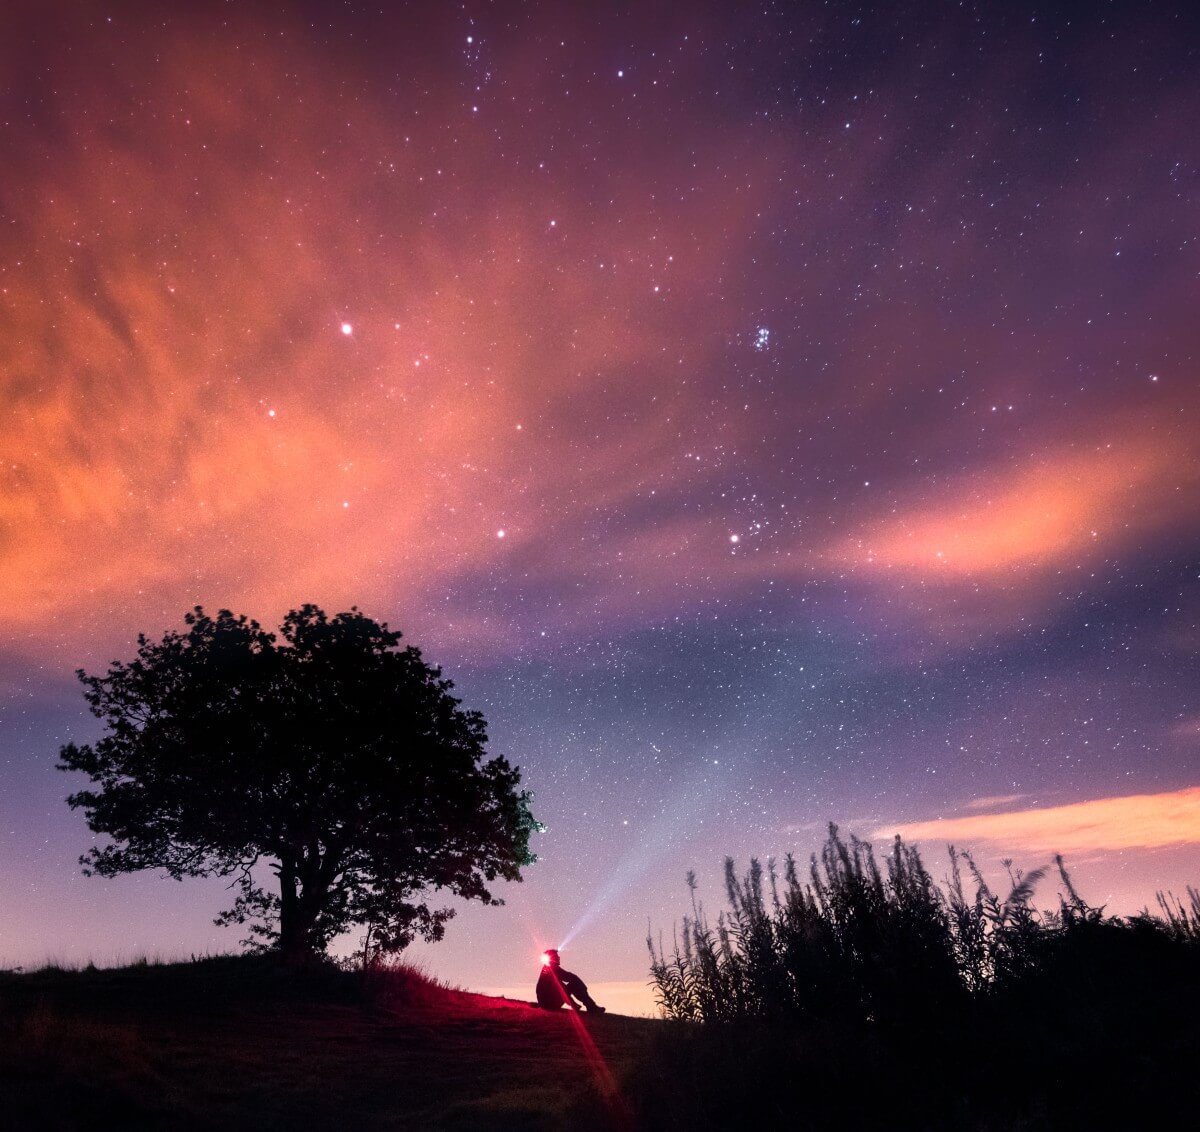 Malvern Hills with stars by Jan Sedlacek